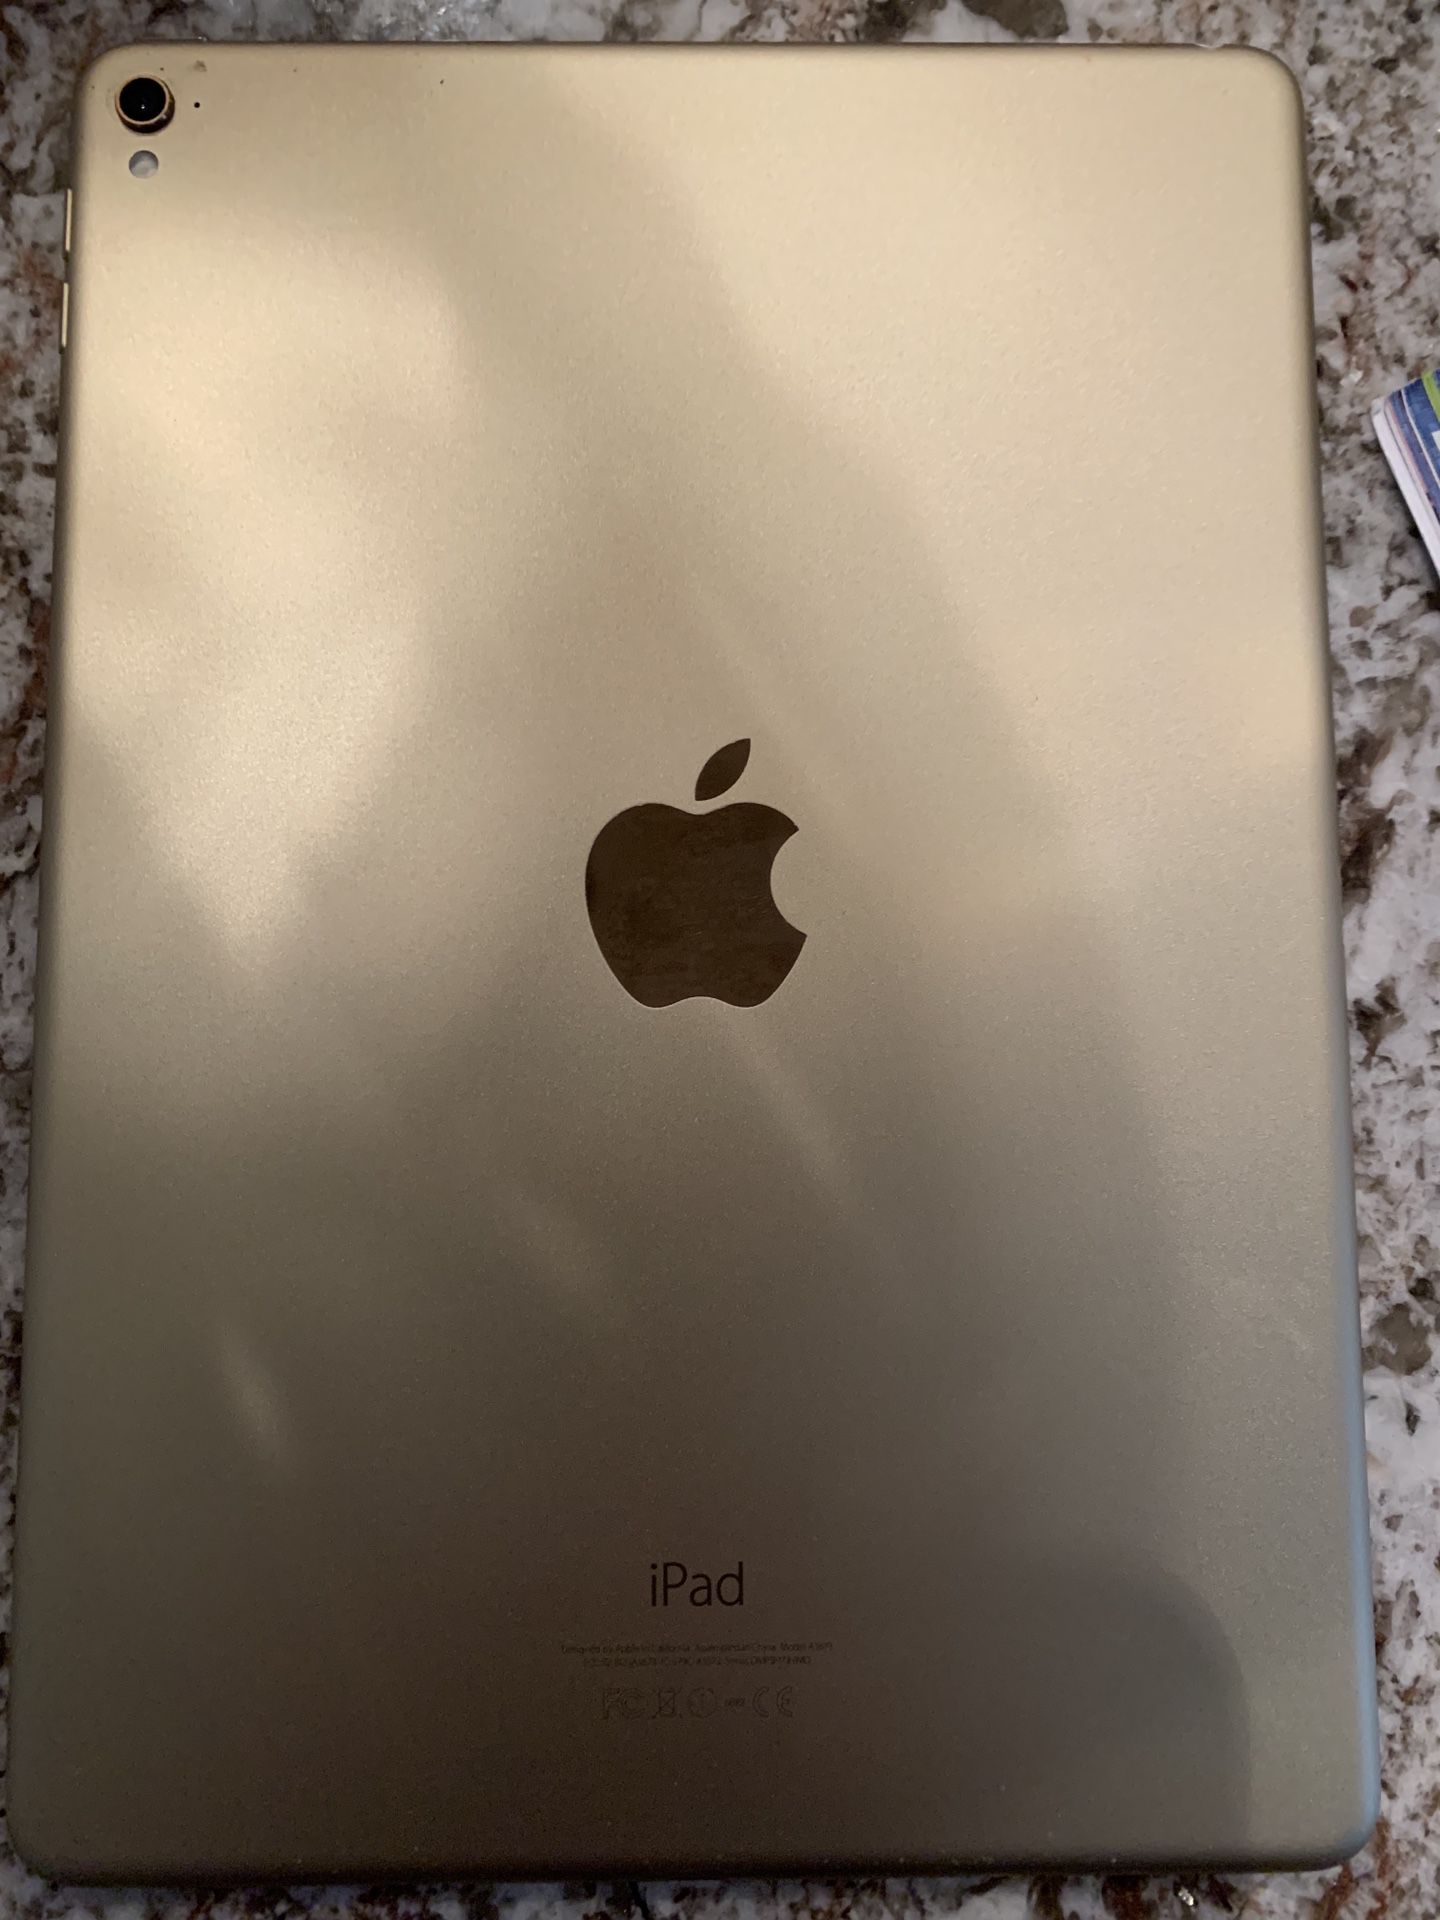 iPad Pro 9.7 32 GB (gold) includes otter box defender case